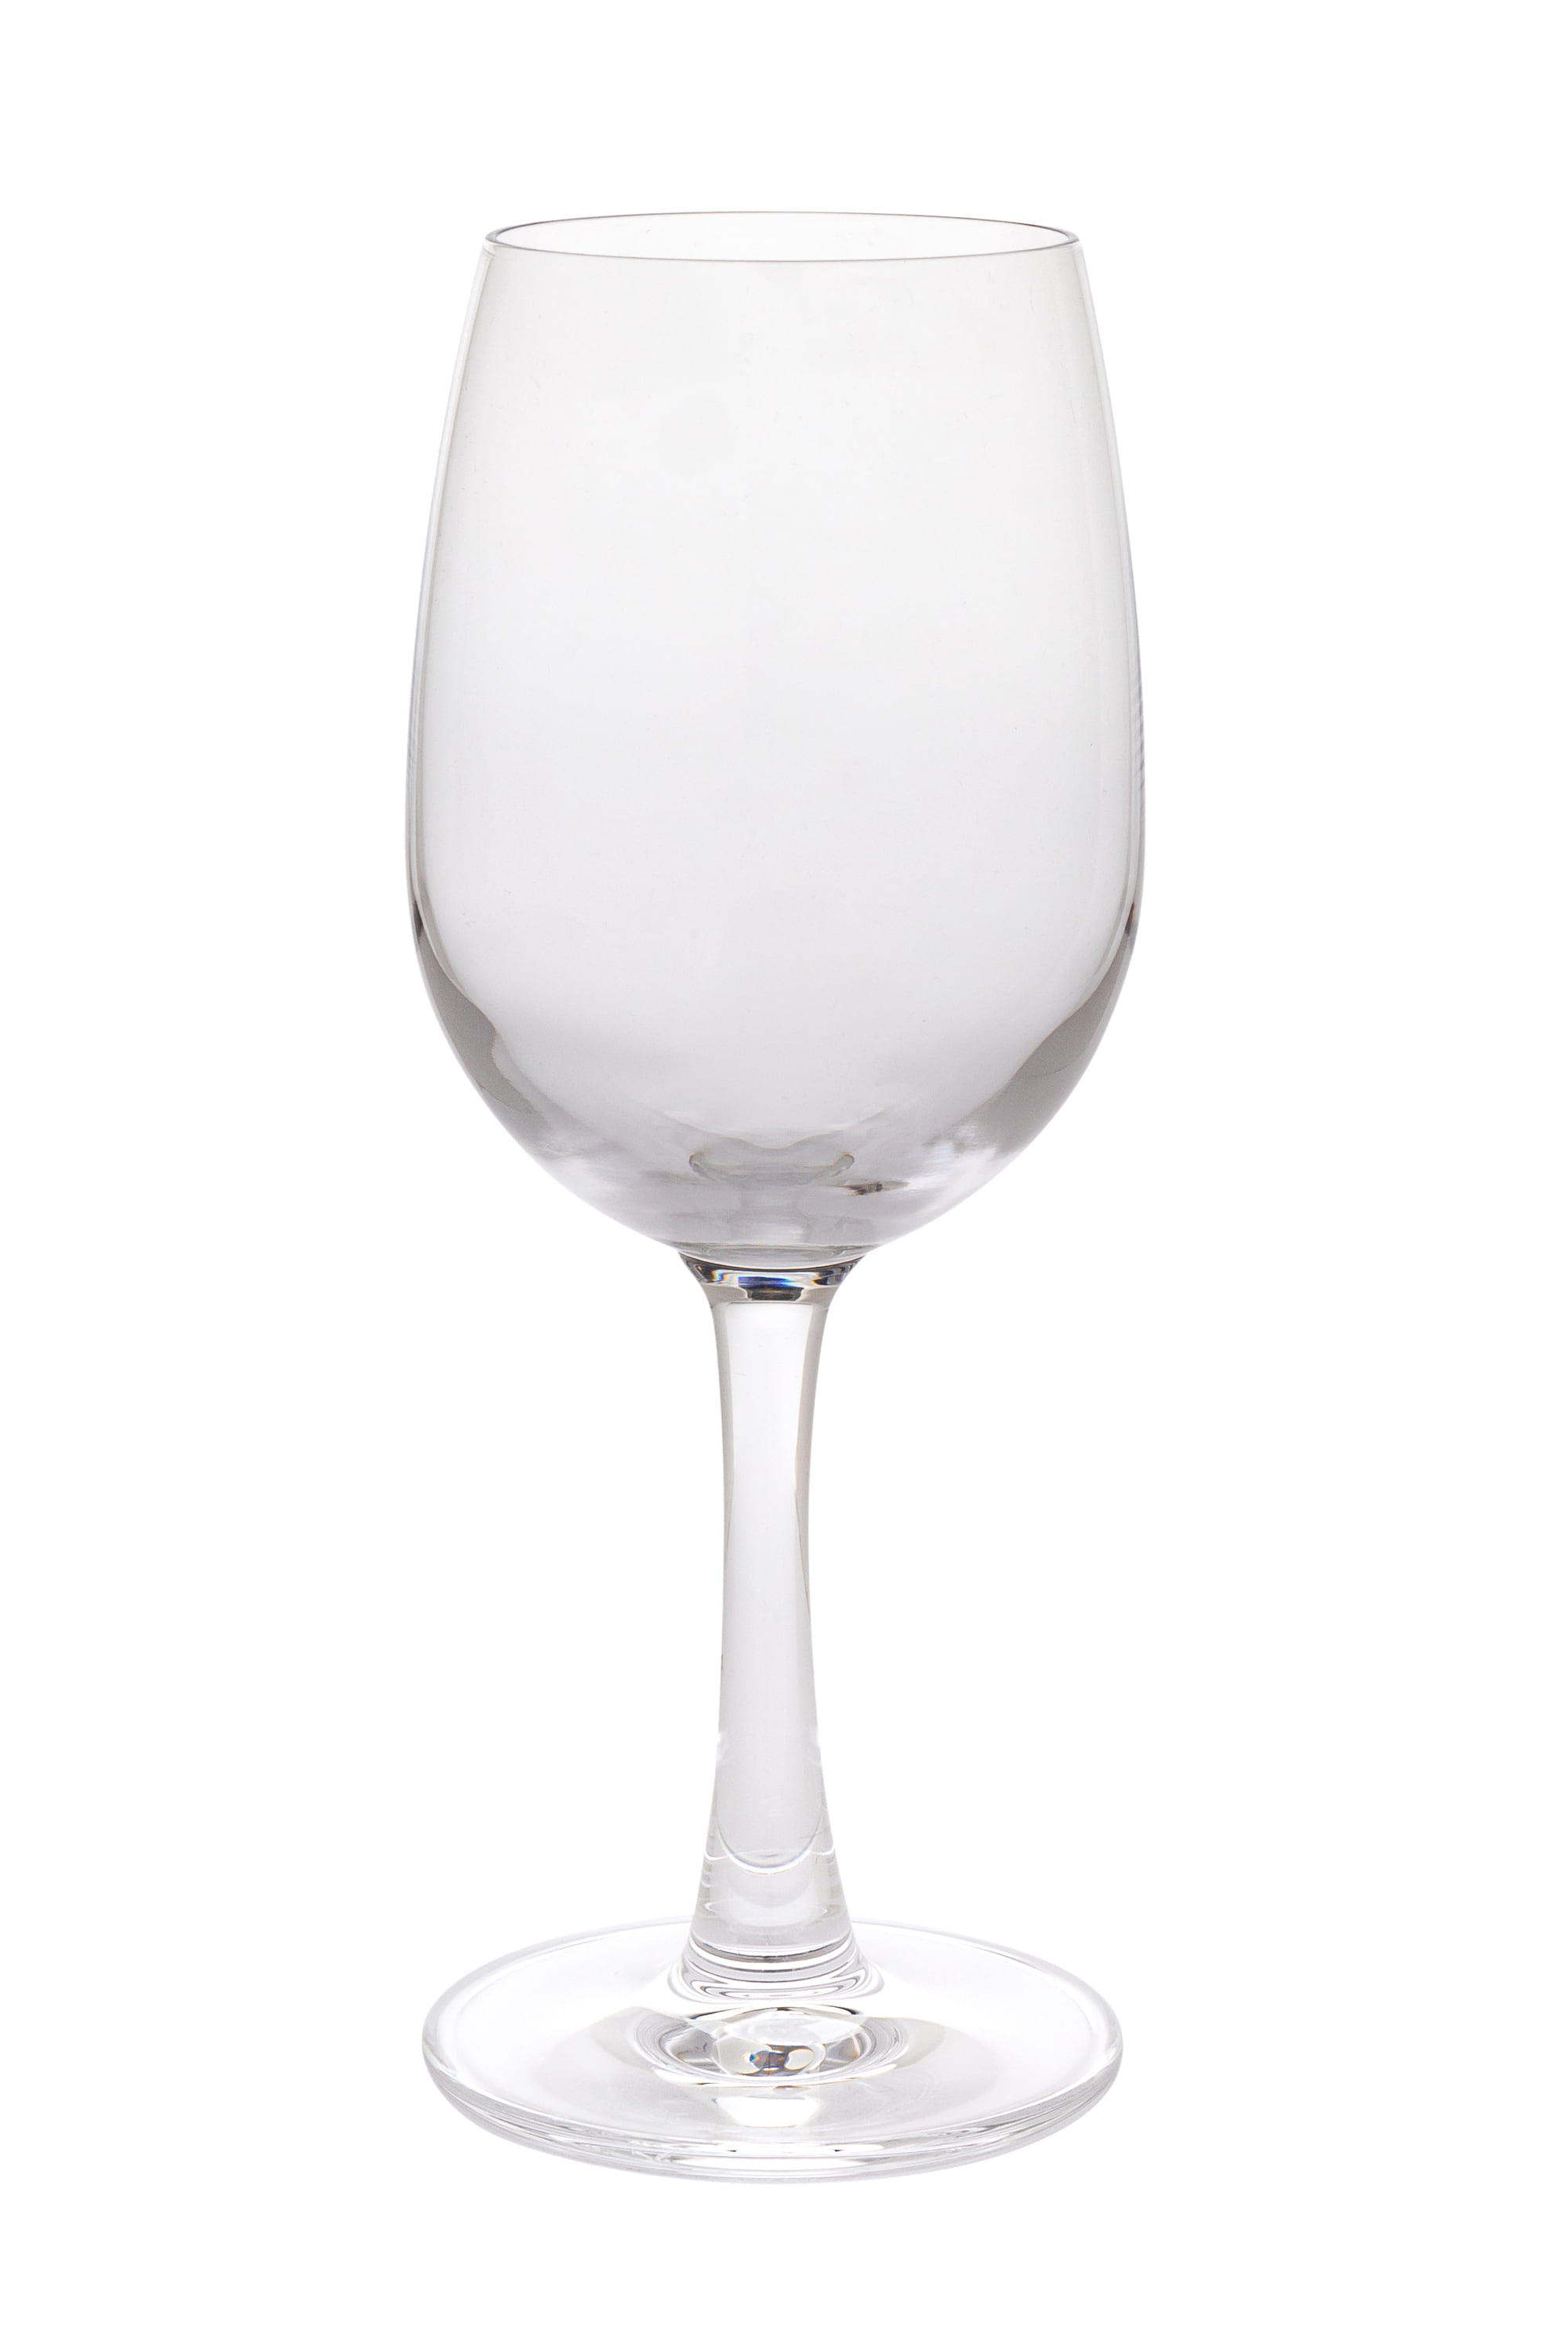 Paibee Glassware Set Blue Embossed Wine Cup Wedding Crystal Glasses Set  Crystal Bottle Set - China Crystal Cup and Crystal Glasses price